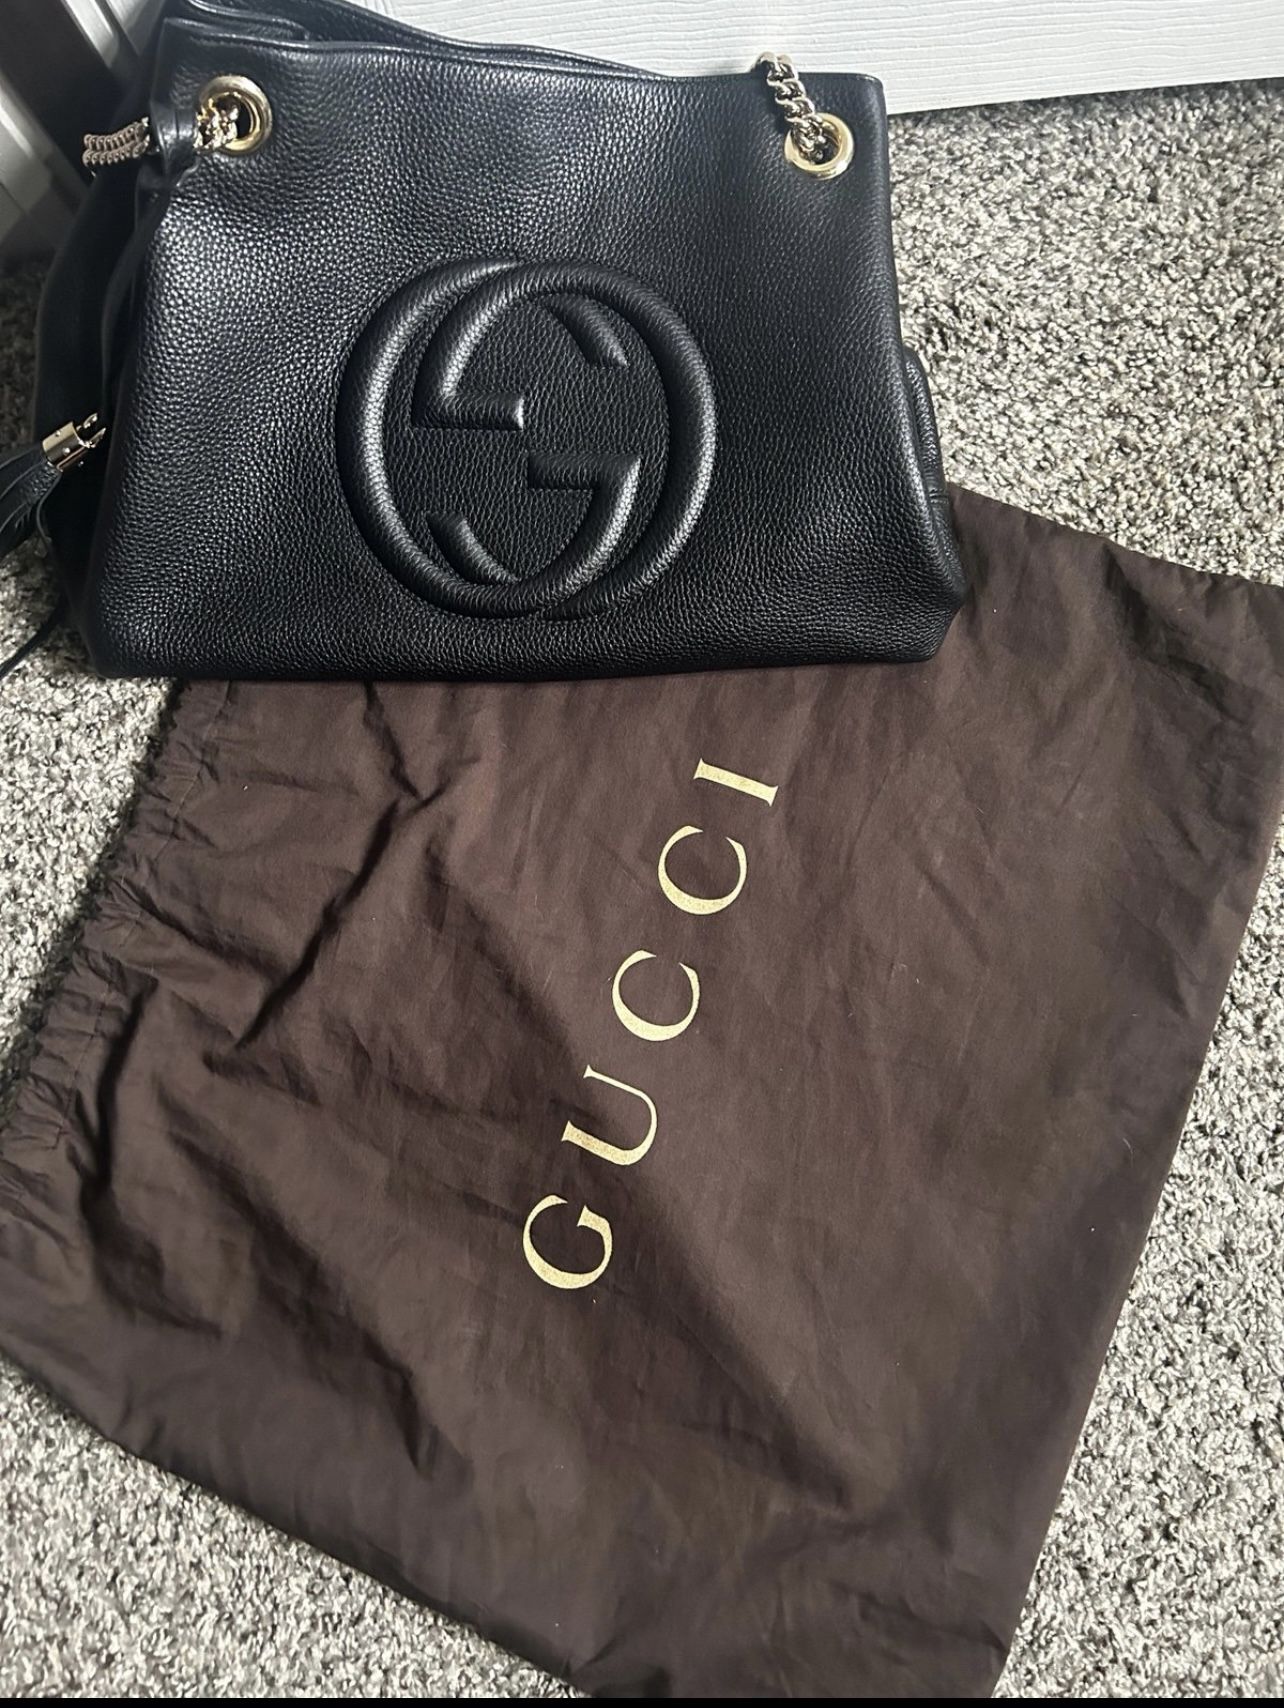 Gucci Soho Medium Shoulder Bag Black calfskin leather Gold chain strap